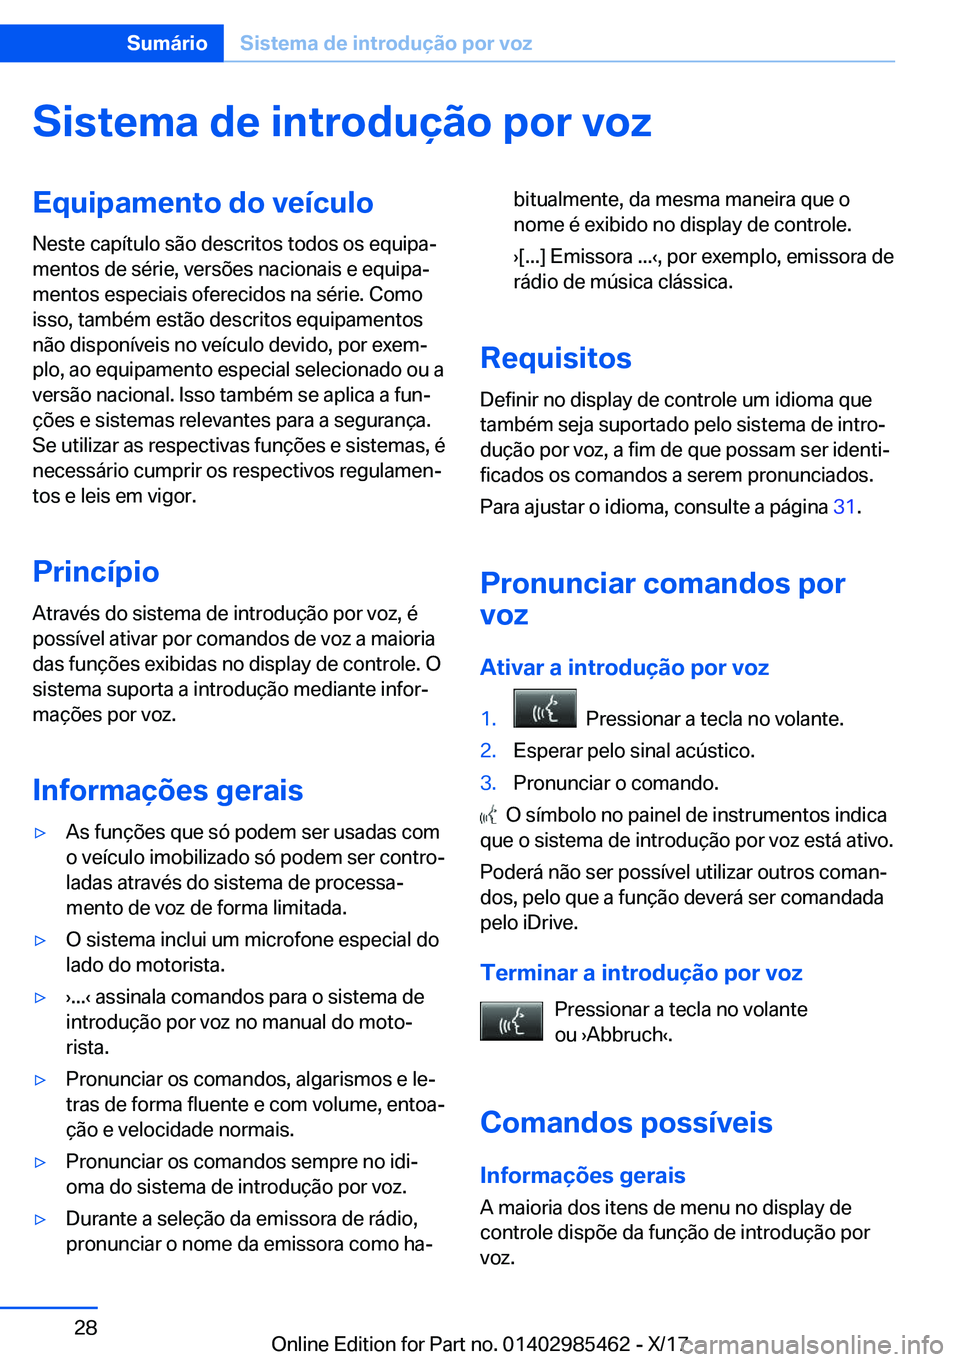 BMW X1 2018  Manual do condutor (in Portuguese) �S�i�s�t�e�m�a��d�e��i�n�t�r�o�d�u�